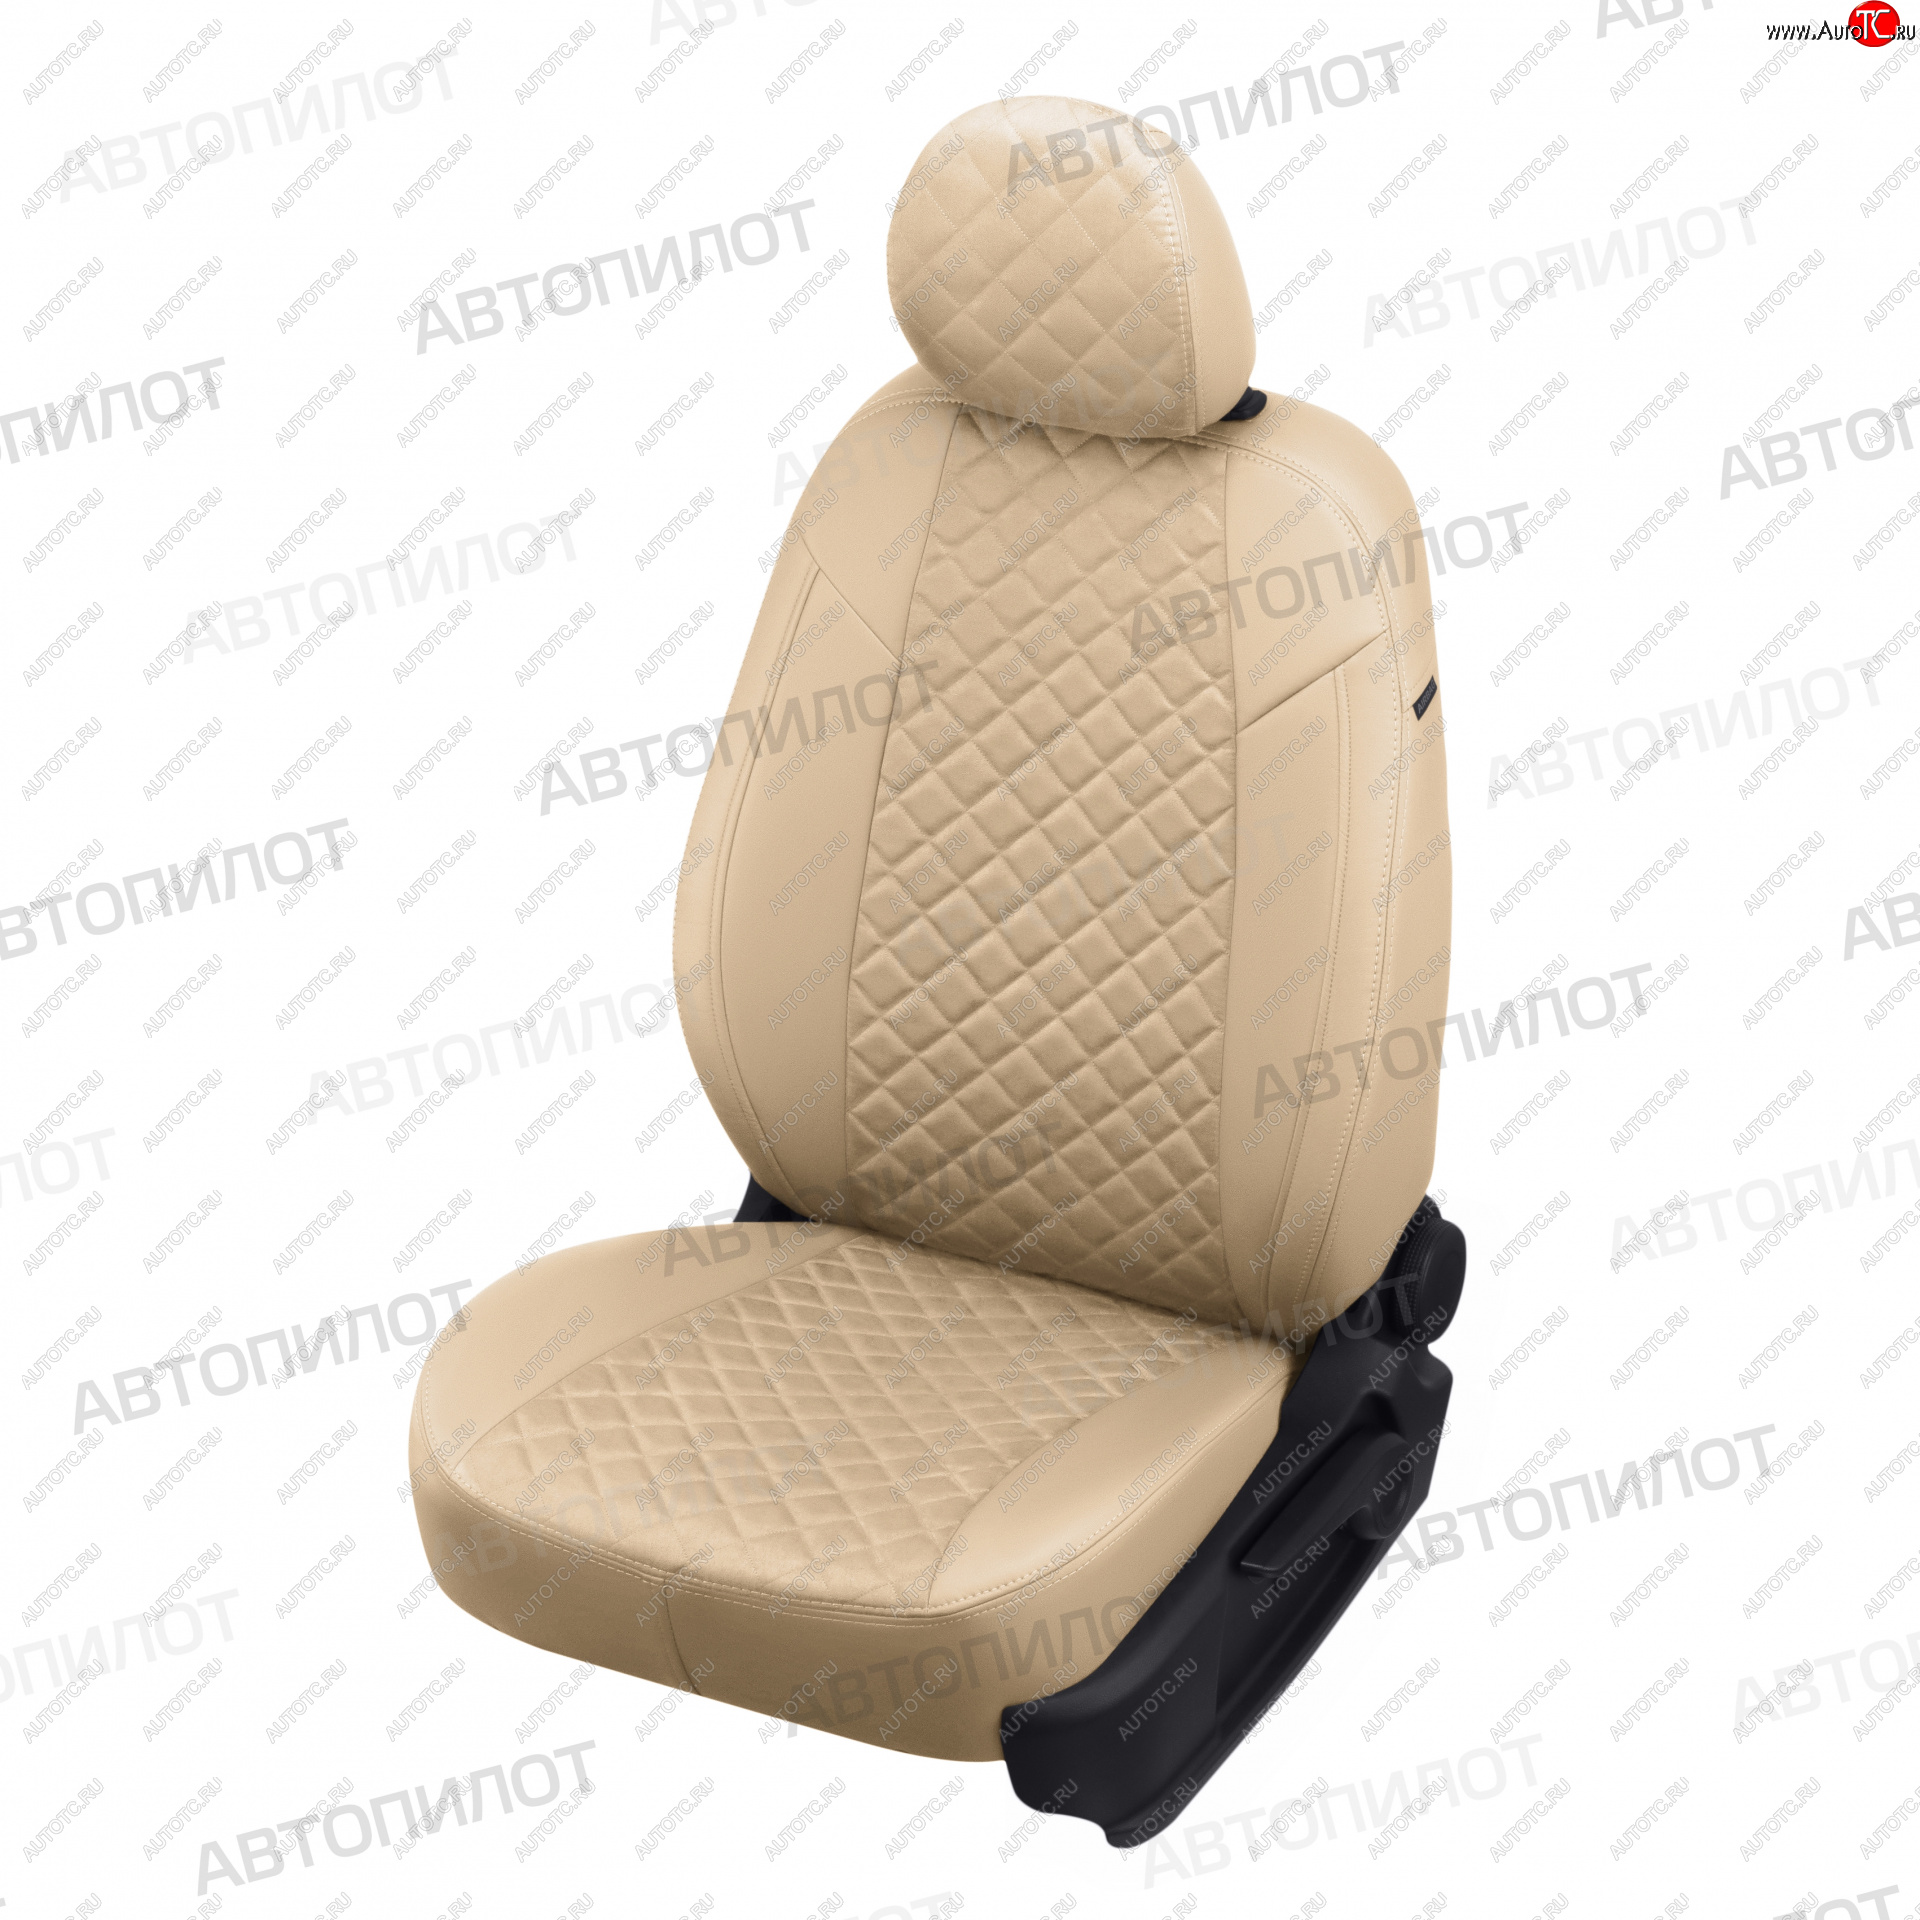 13 999 р. Чехлы сидений (экокожа/алькантара) Автопилот Ромб  Ford C-max  Mk1 (2003-2010) (бежевый)